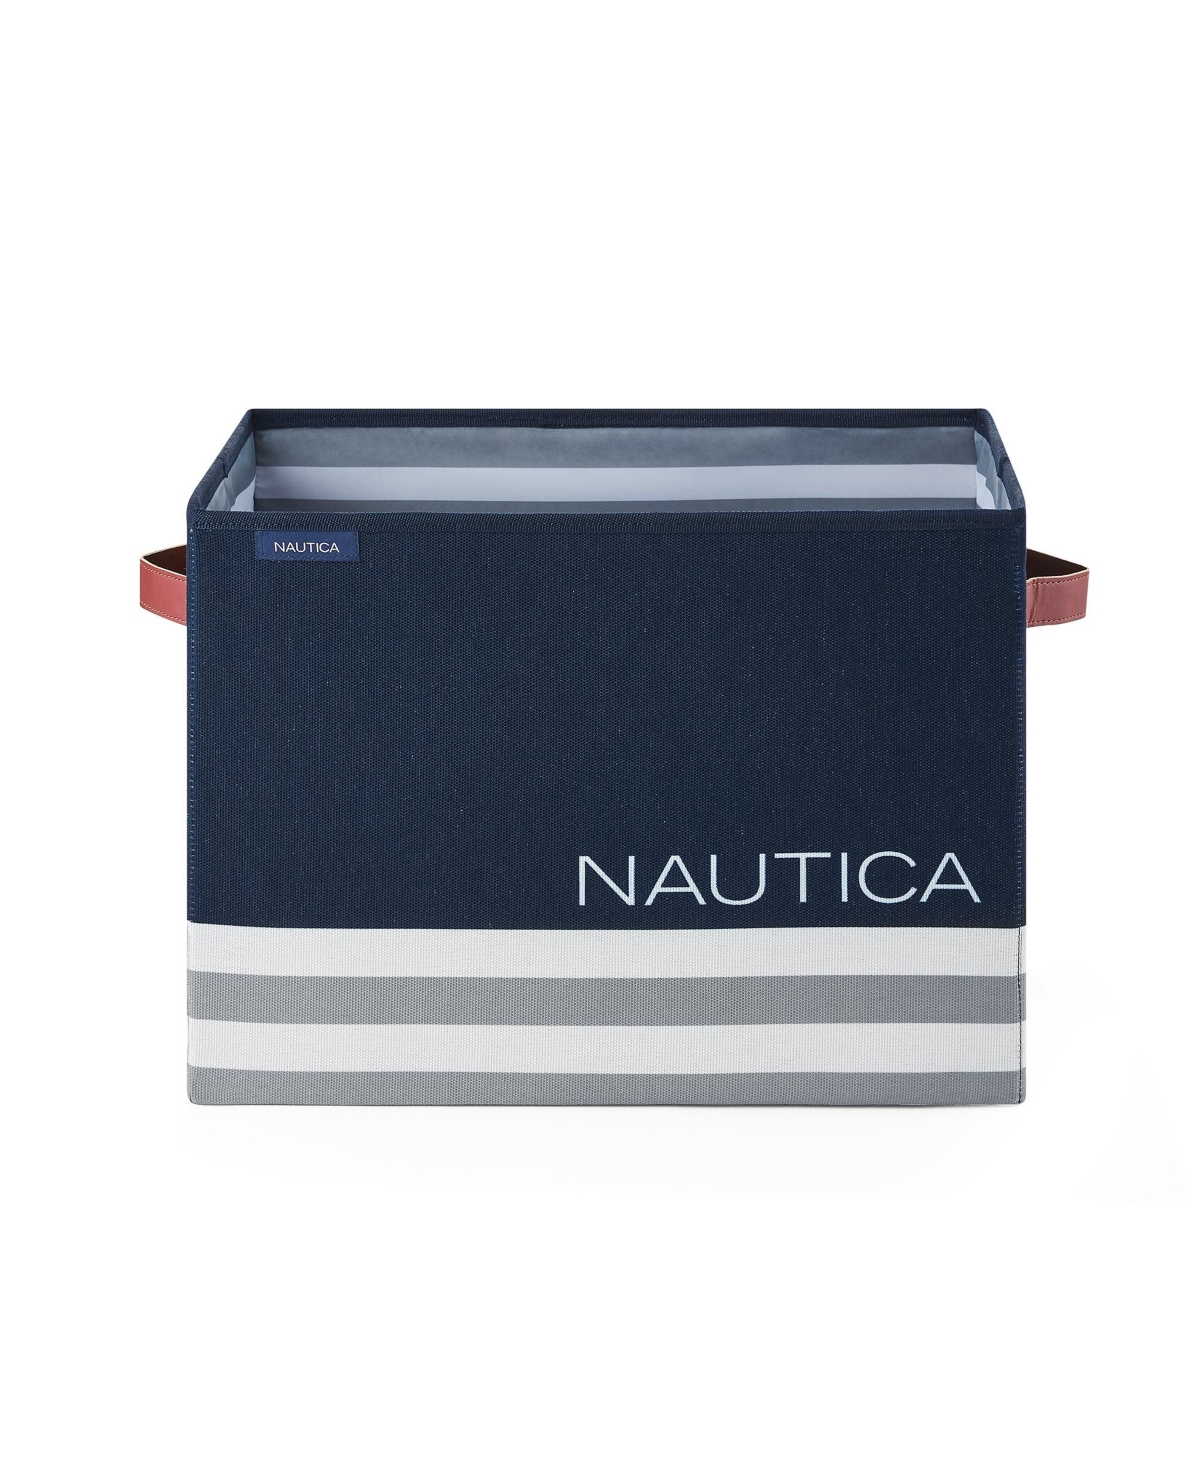 Nautica Folded Rectangle Bin Box Weave In Navy Stripe